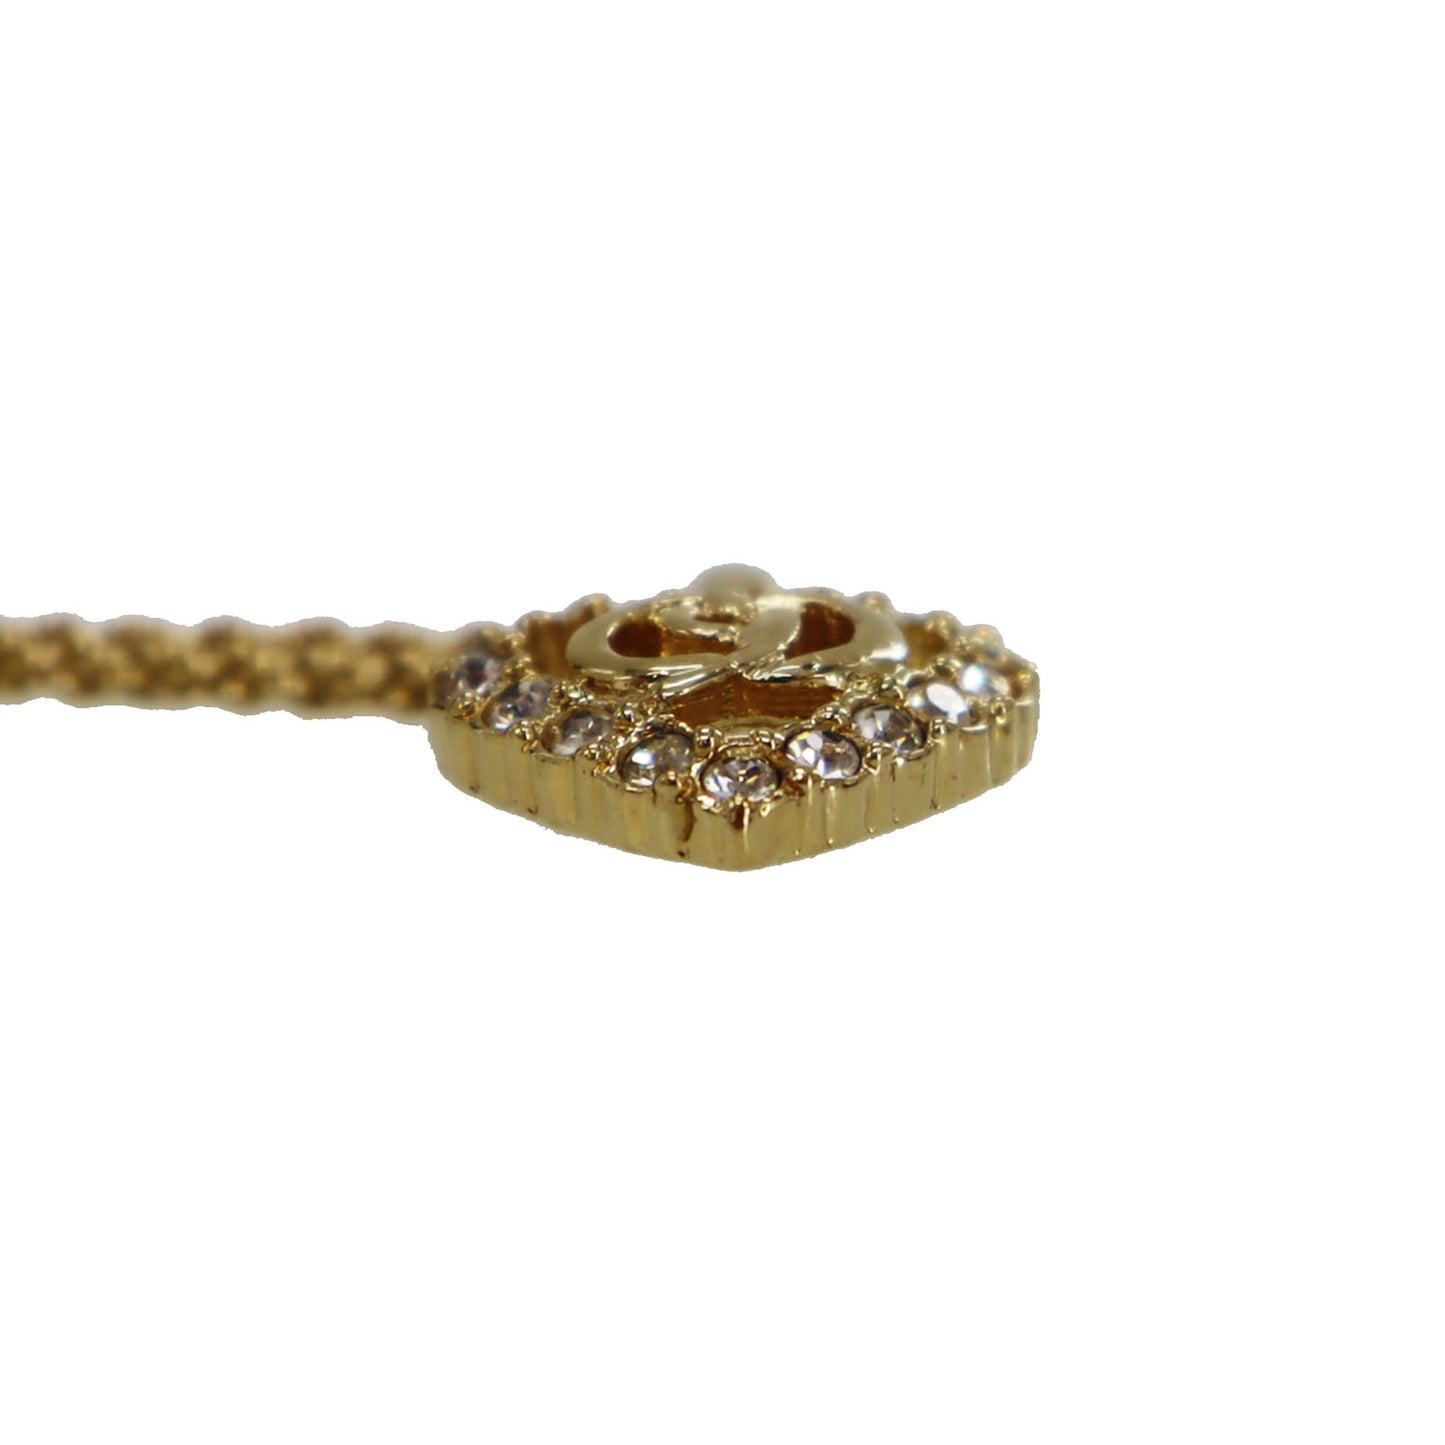 Christian Dior CD Logo Chain Heart Necklace Rhinestone Gold-Plated #CD317